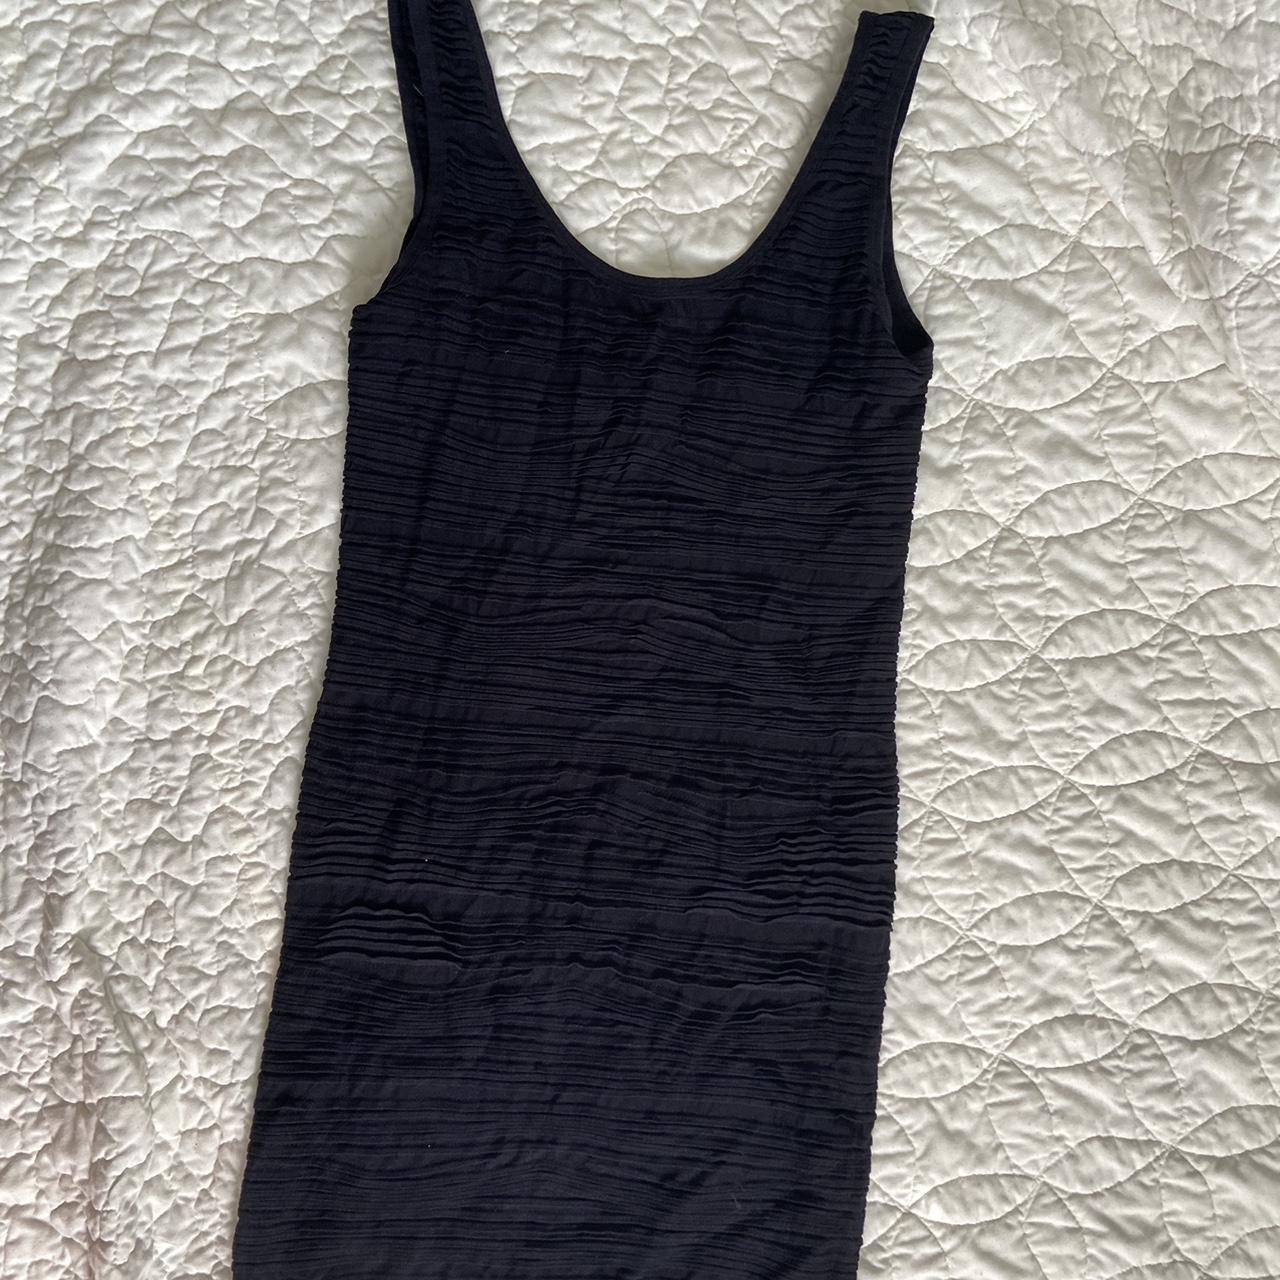 Product Image 1 - Black Mini Ribbed Dress
- textured